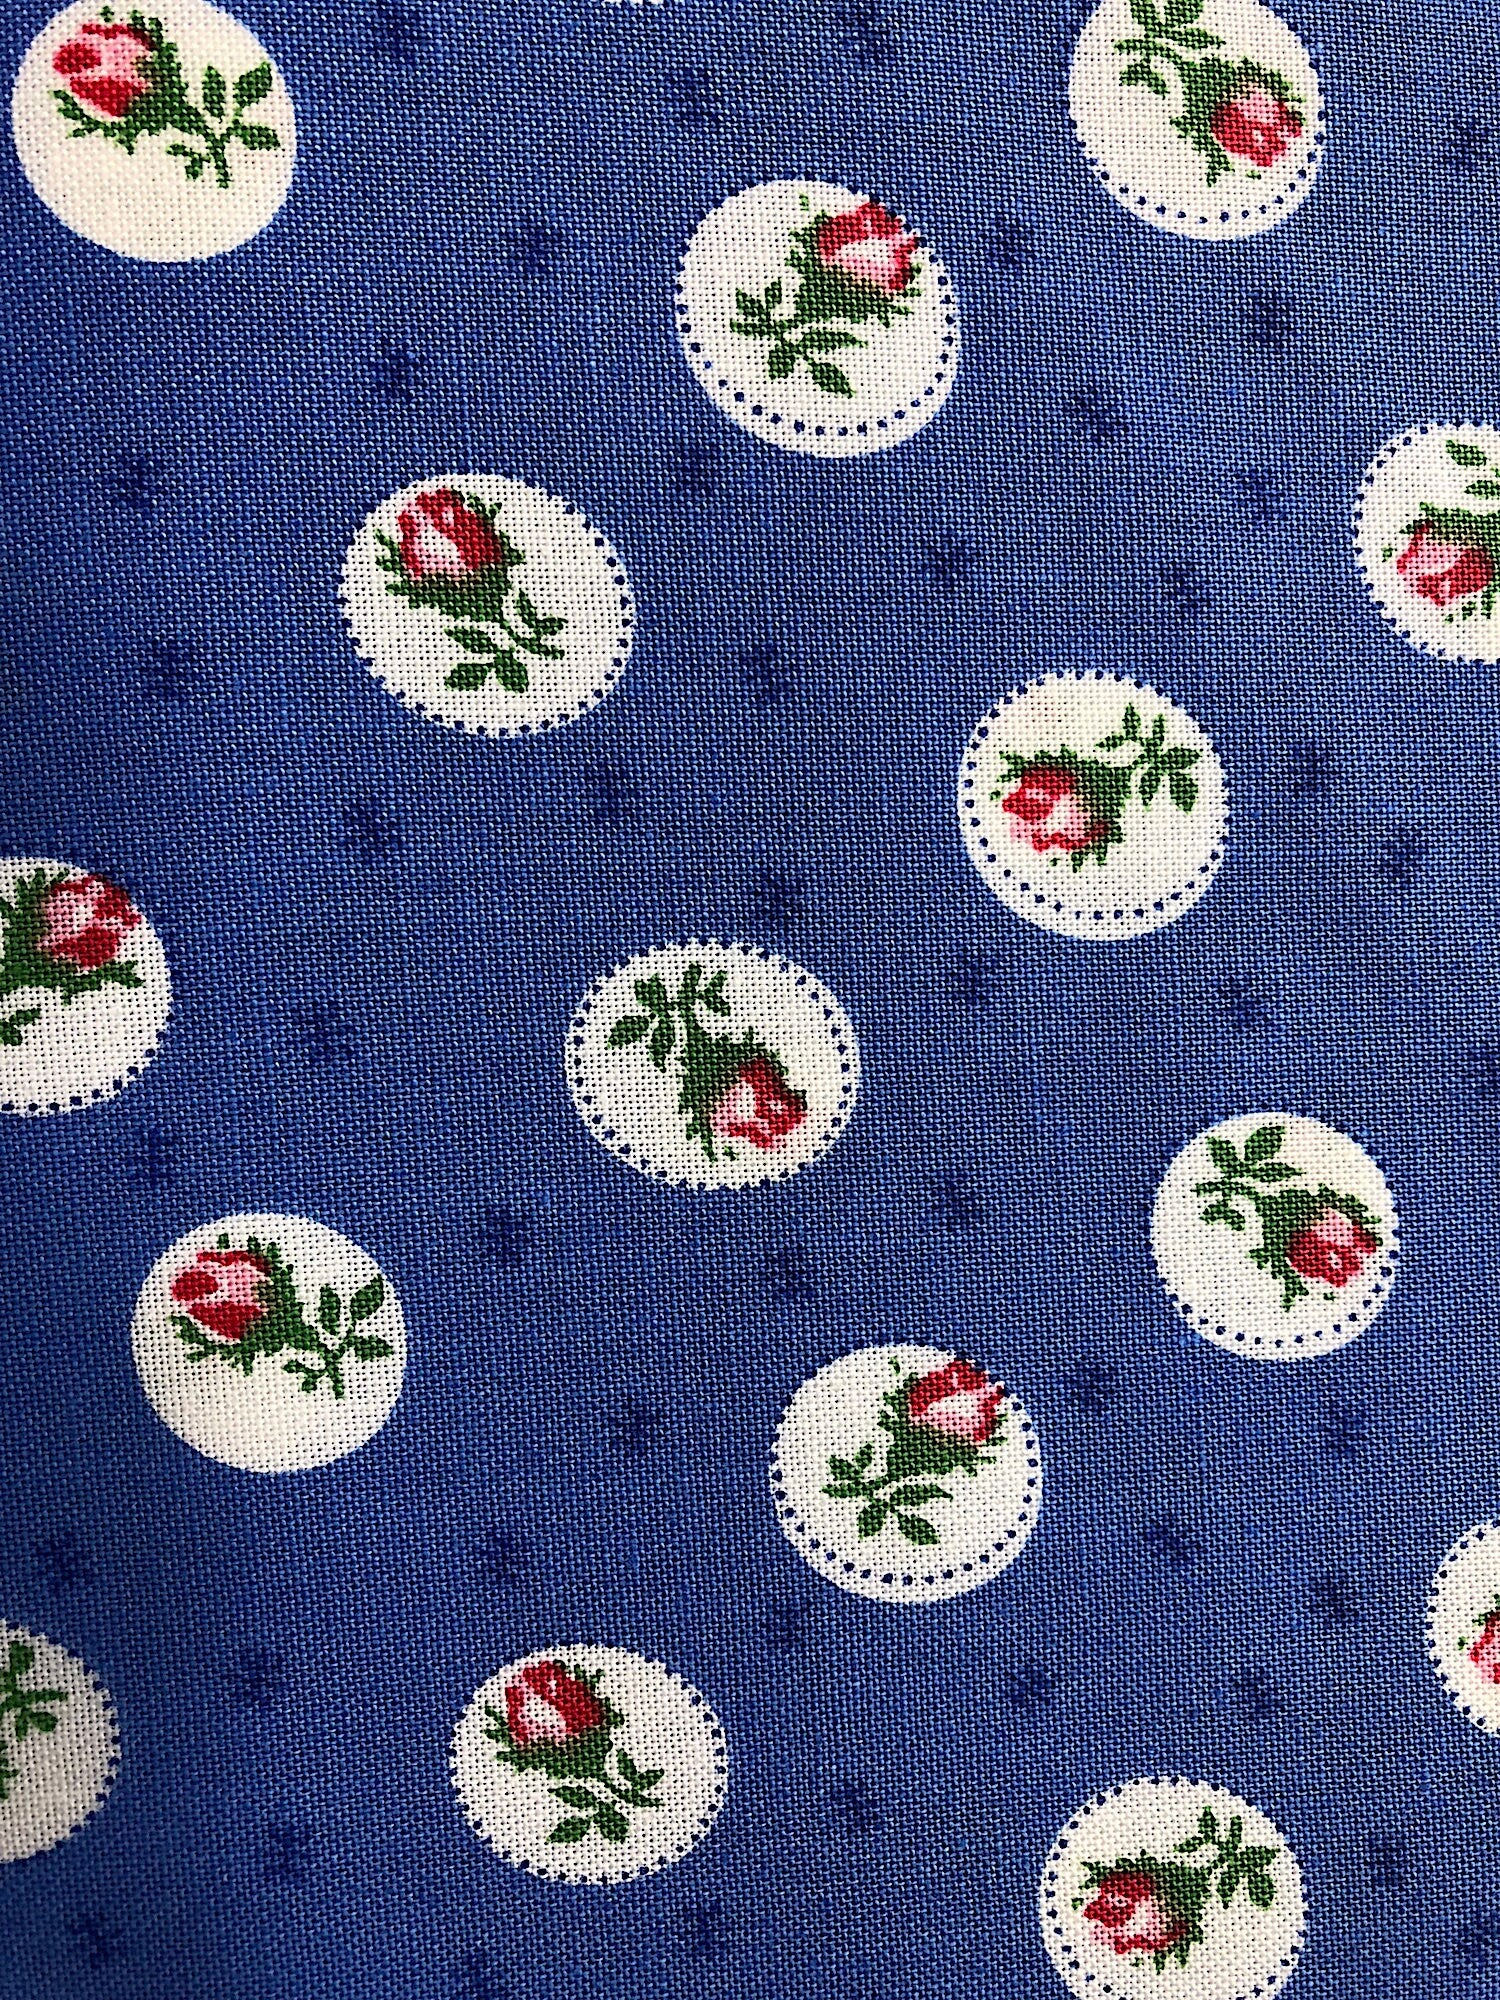 Rosebud Fabric - Rose Fabric - First Blush - Cotton Fabric - Windham Fabrics - FL-46